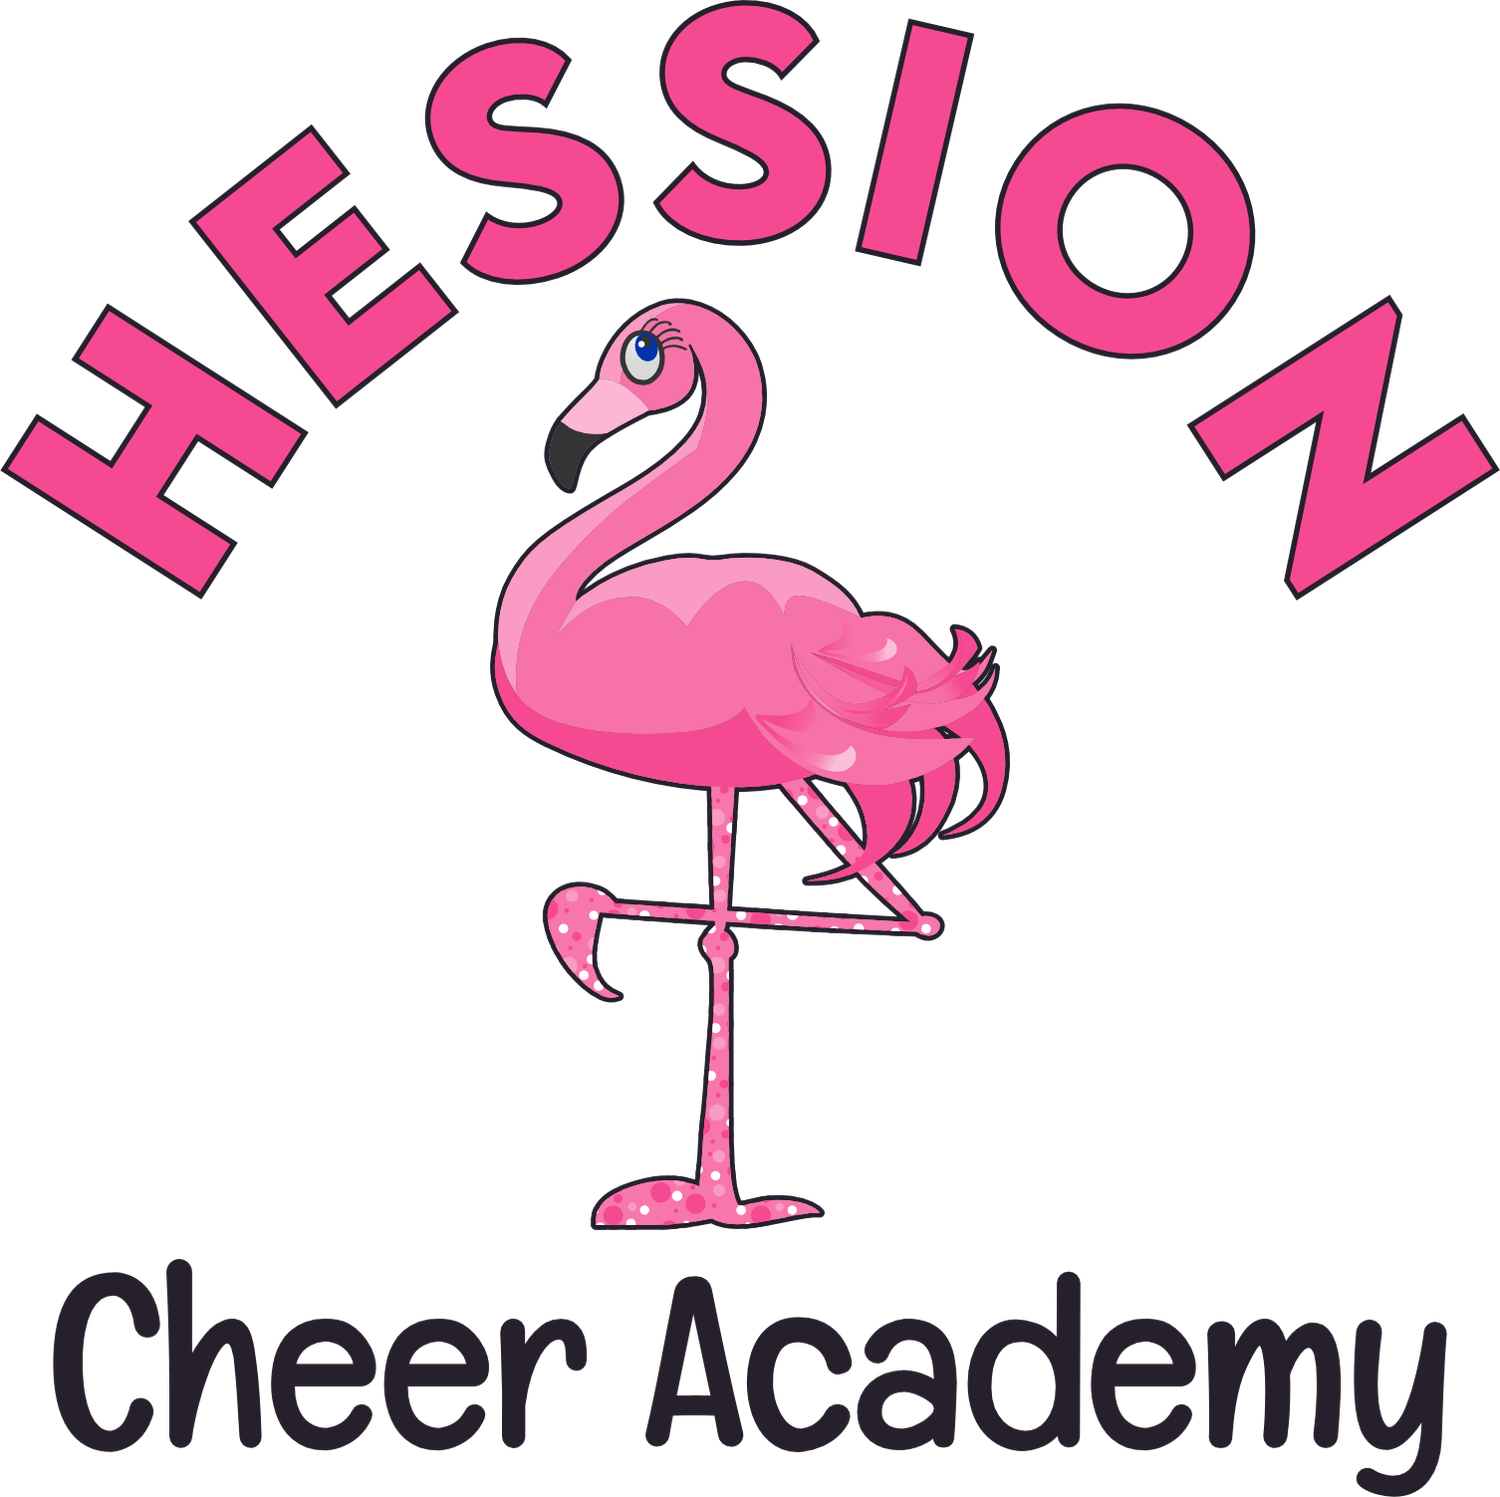 Hession Cheer Academy